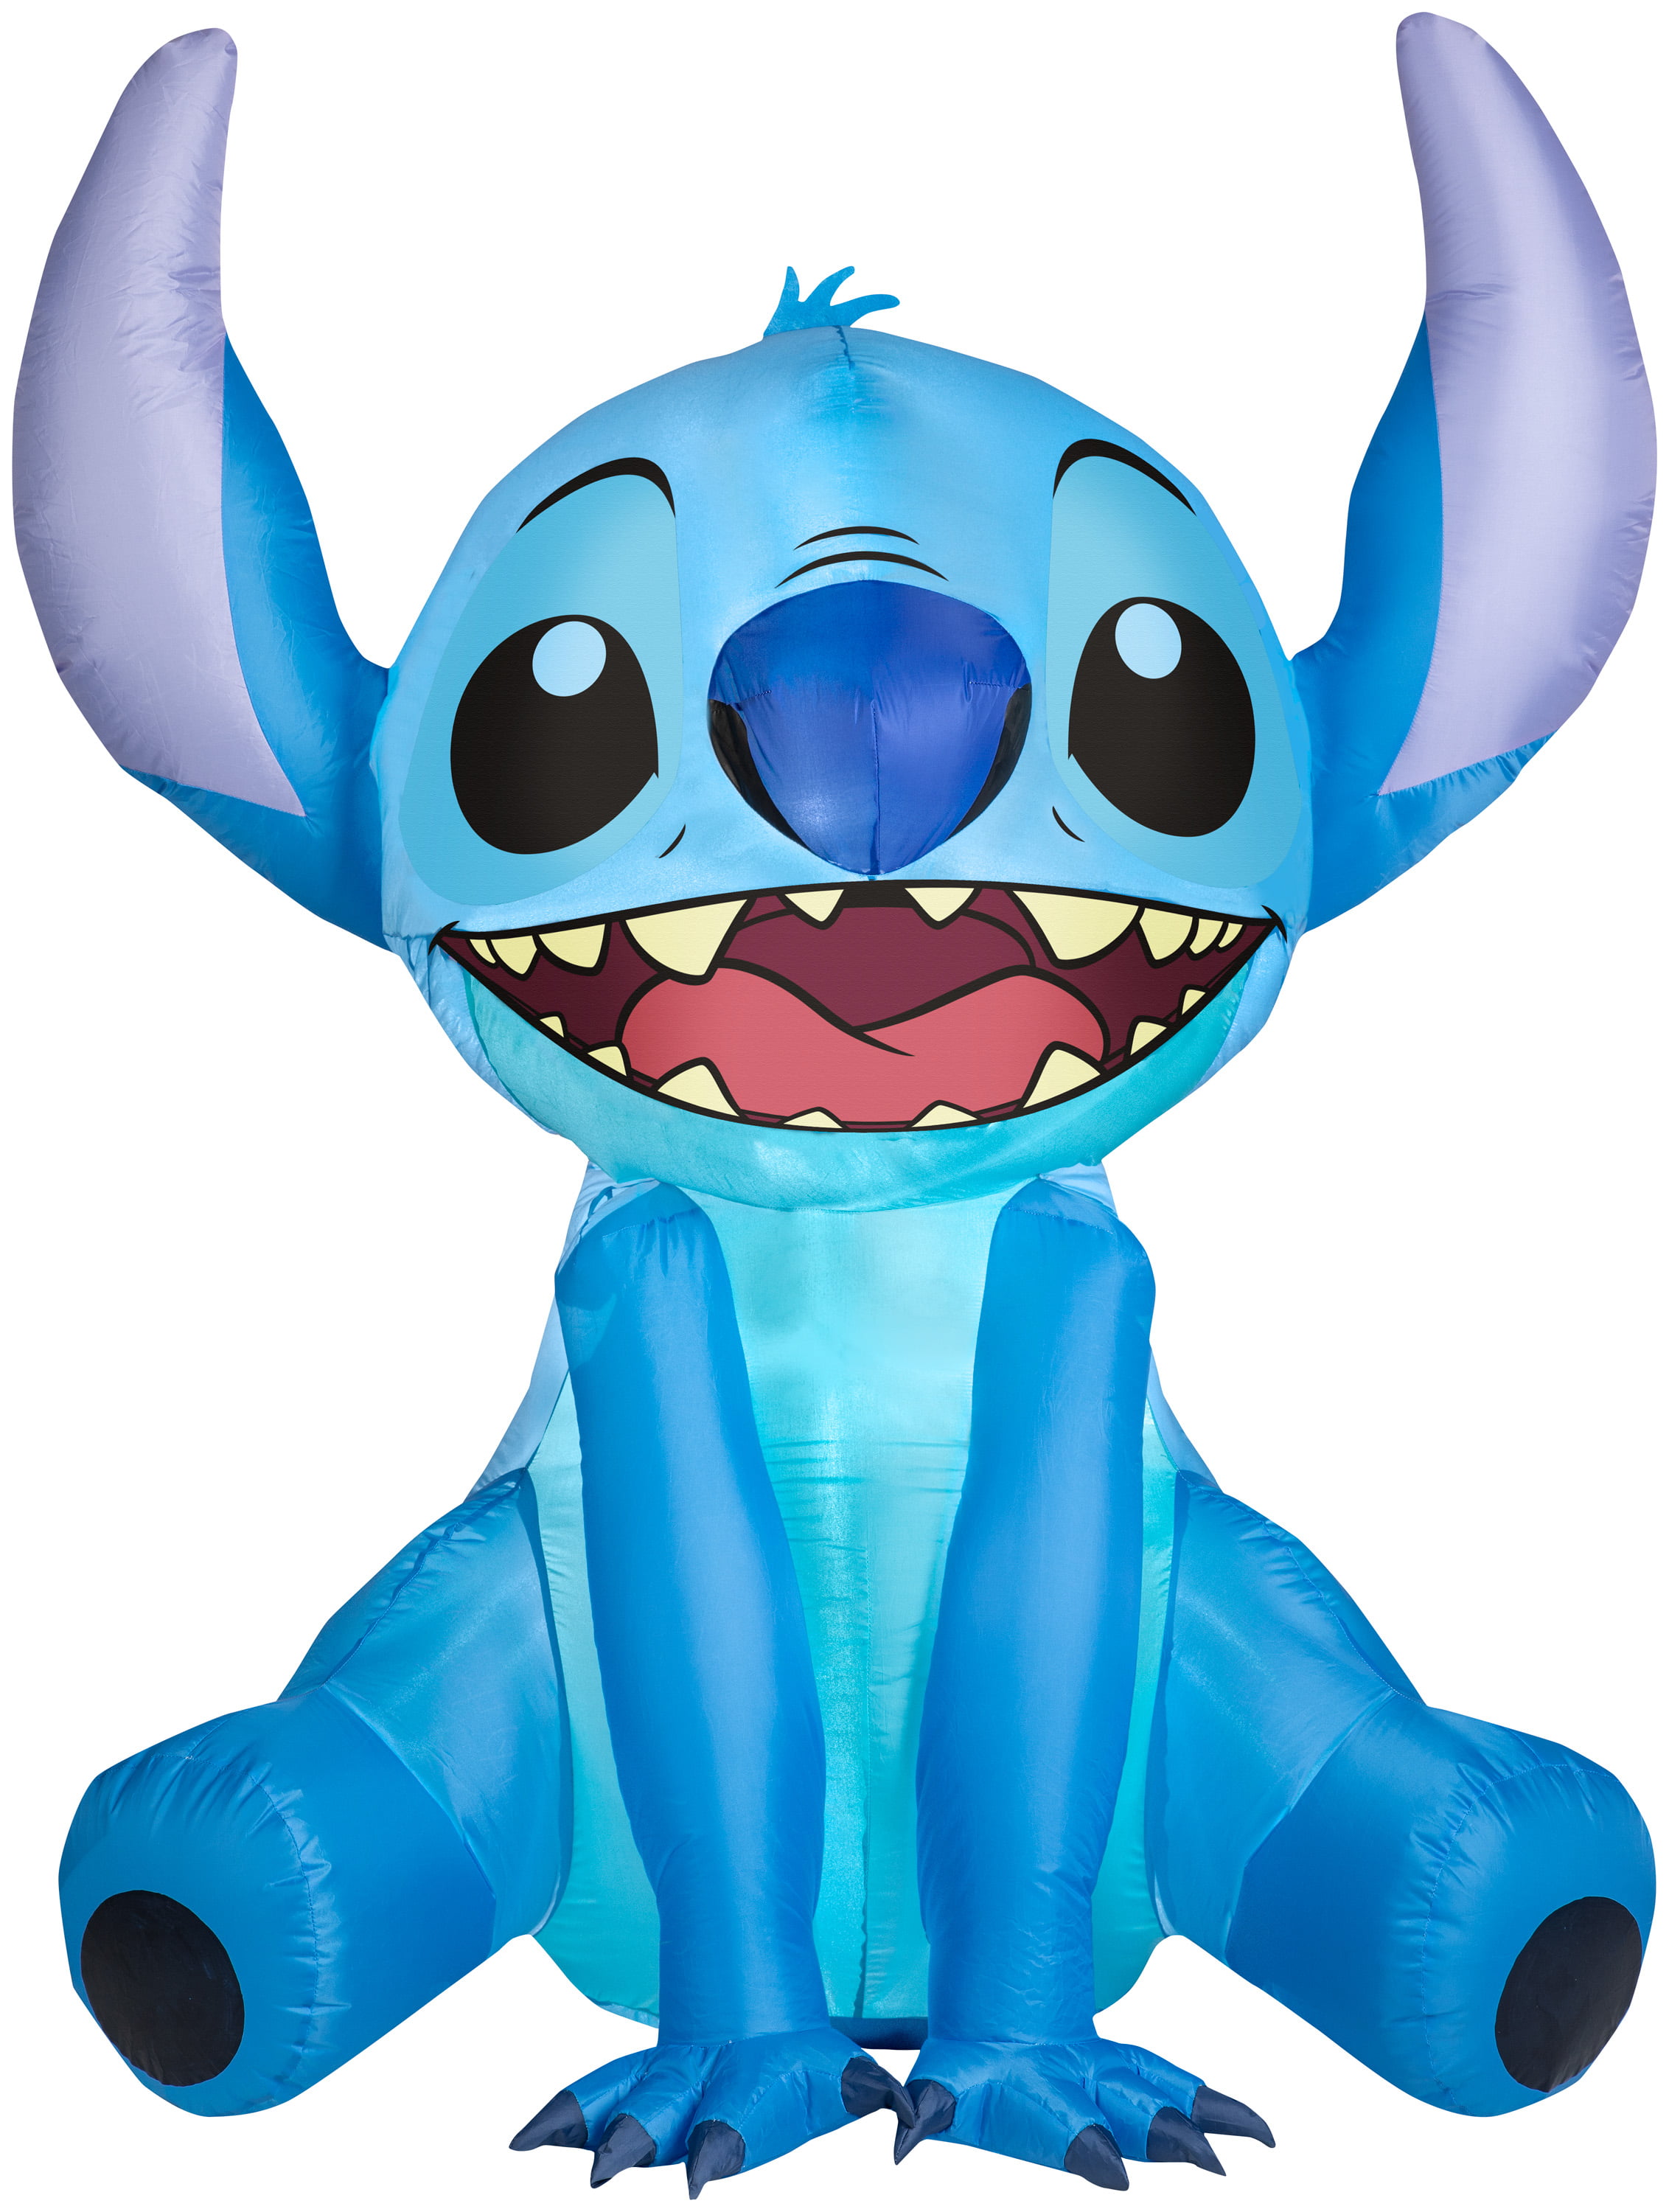 Gemmy Airblown Disney Limited Edition Stitch S LG Disney, 5 ft Tall, blue -  